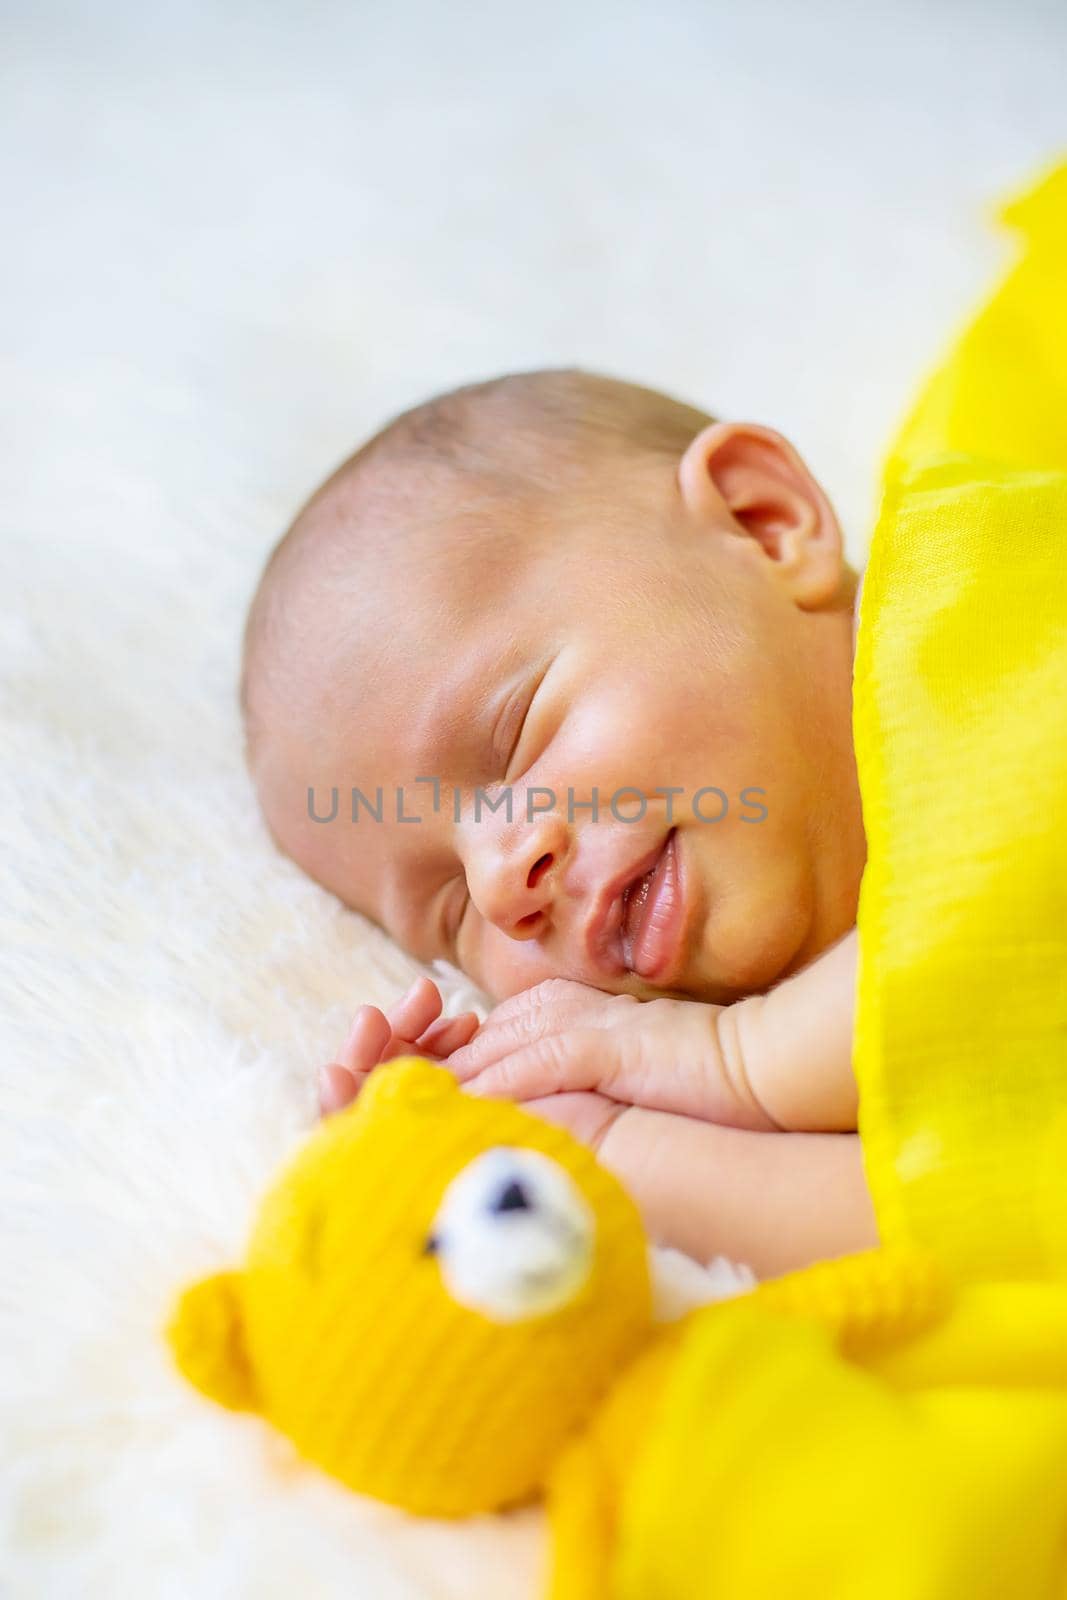 Newborn baby sleeping on a white background. Selective focus. by yanadjana